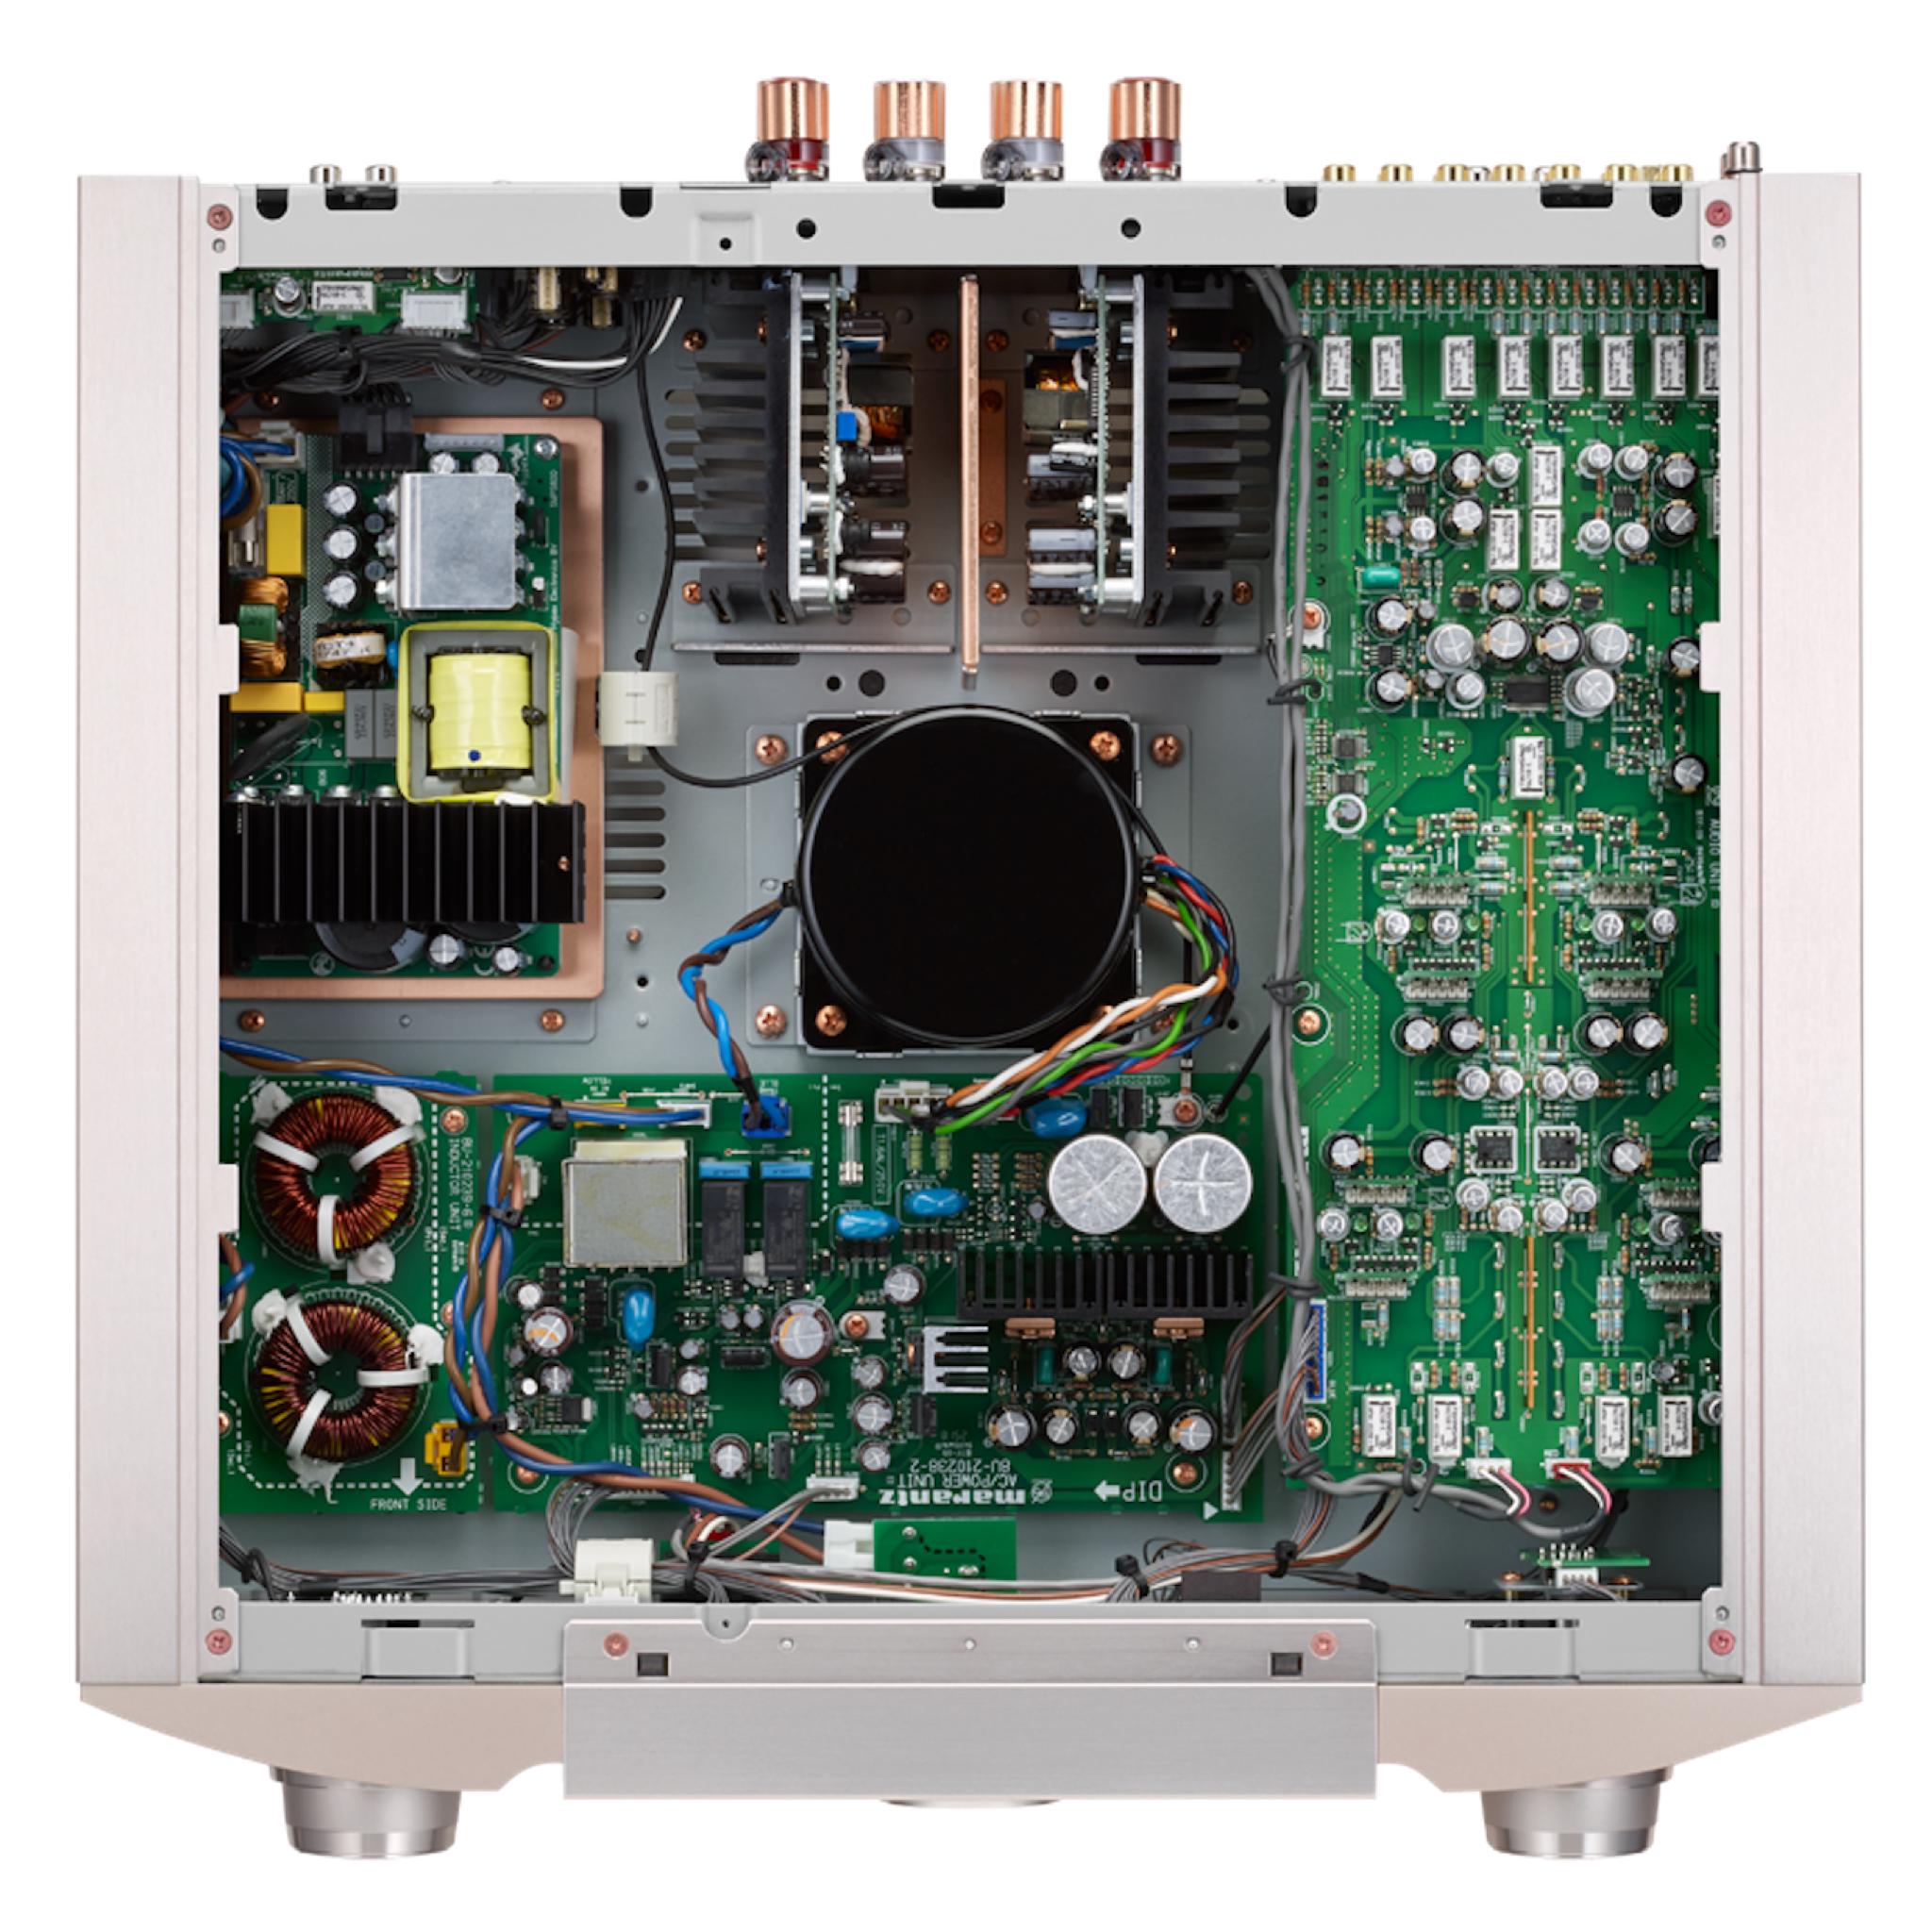 Marantz PM-12SE - Integrated Amplifier - AVStore